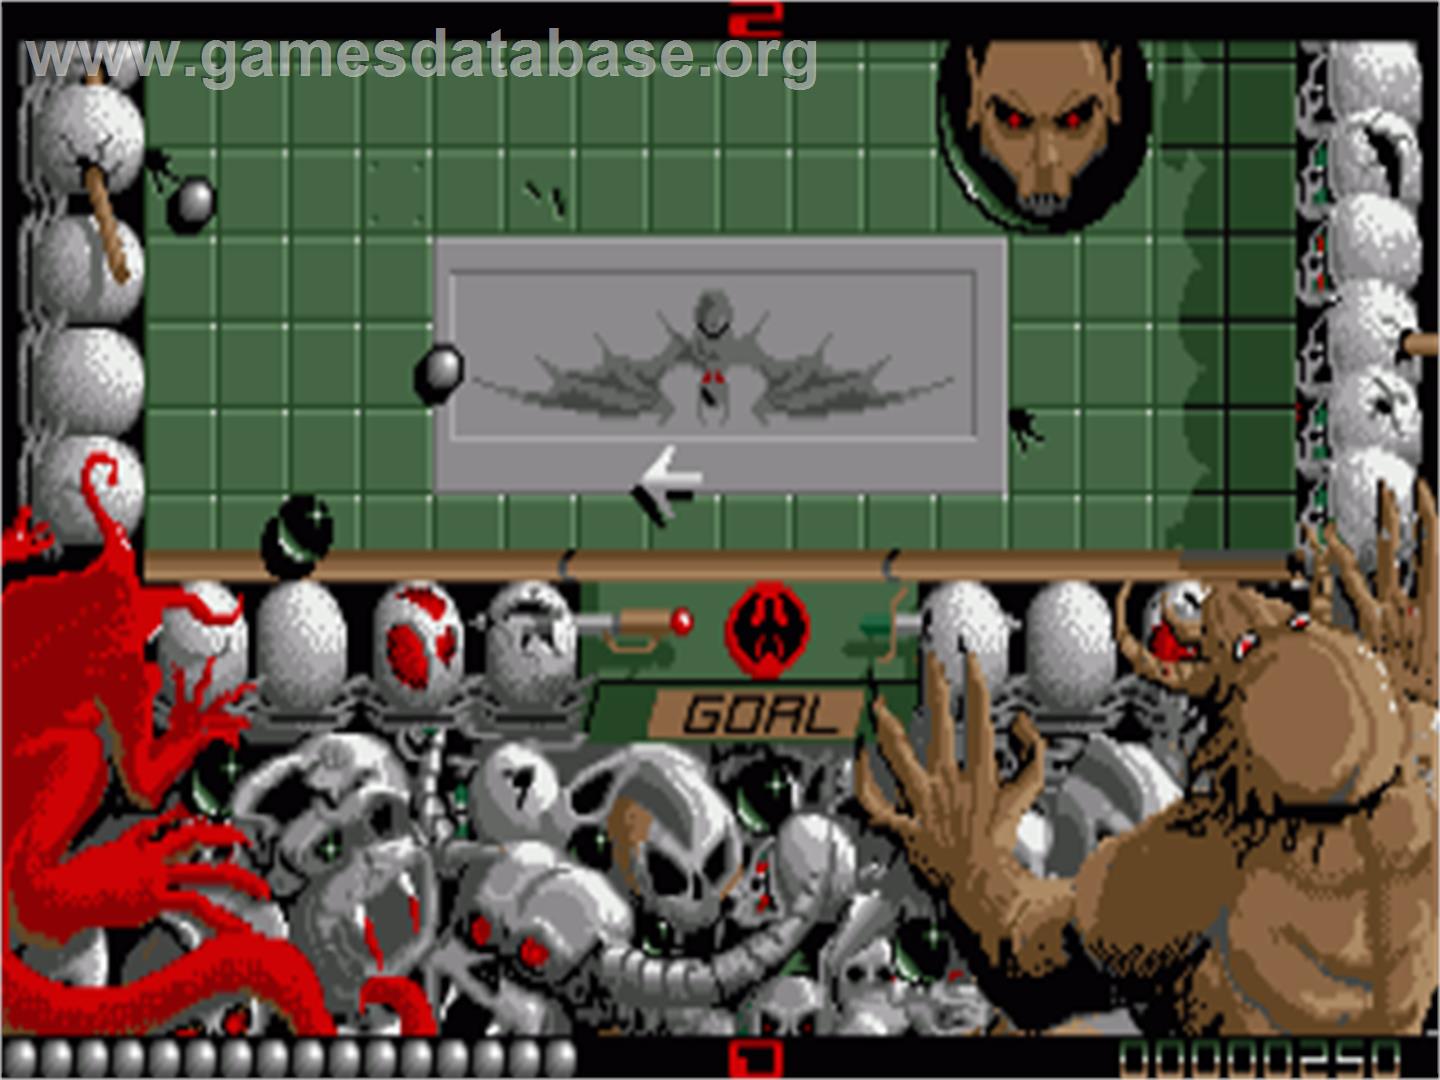 Ballistix - Commodore Amiga - Artwork - In Game